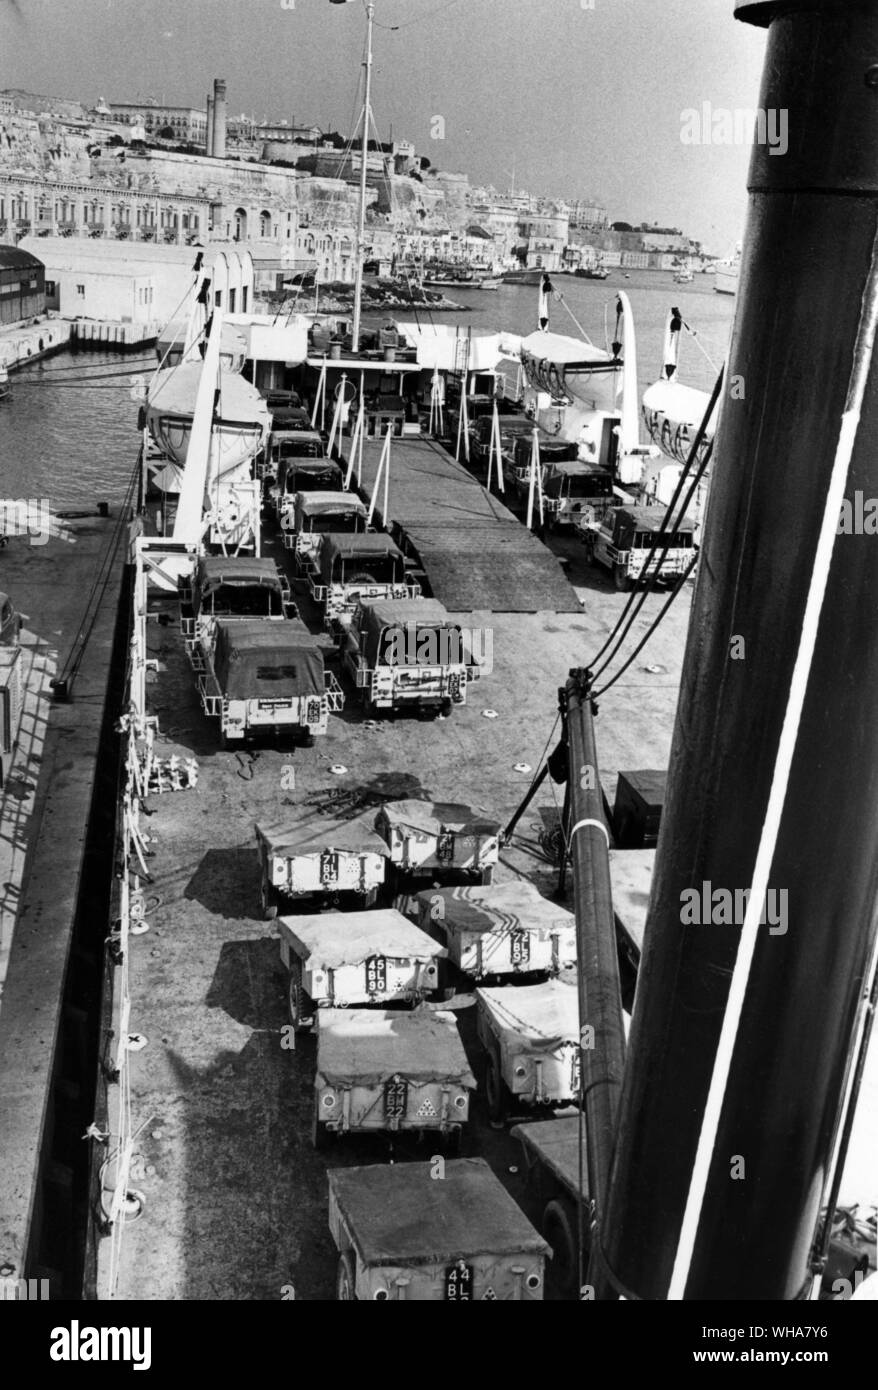 Probleme in Malta. Armee Fahrzeuge auf See im Grand Harbour Malta an Bord des Empire Guillemot. 4. Februar 1967 Stockfoto